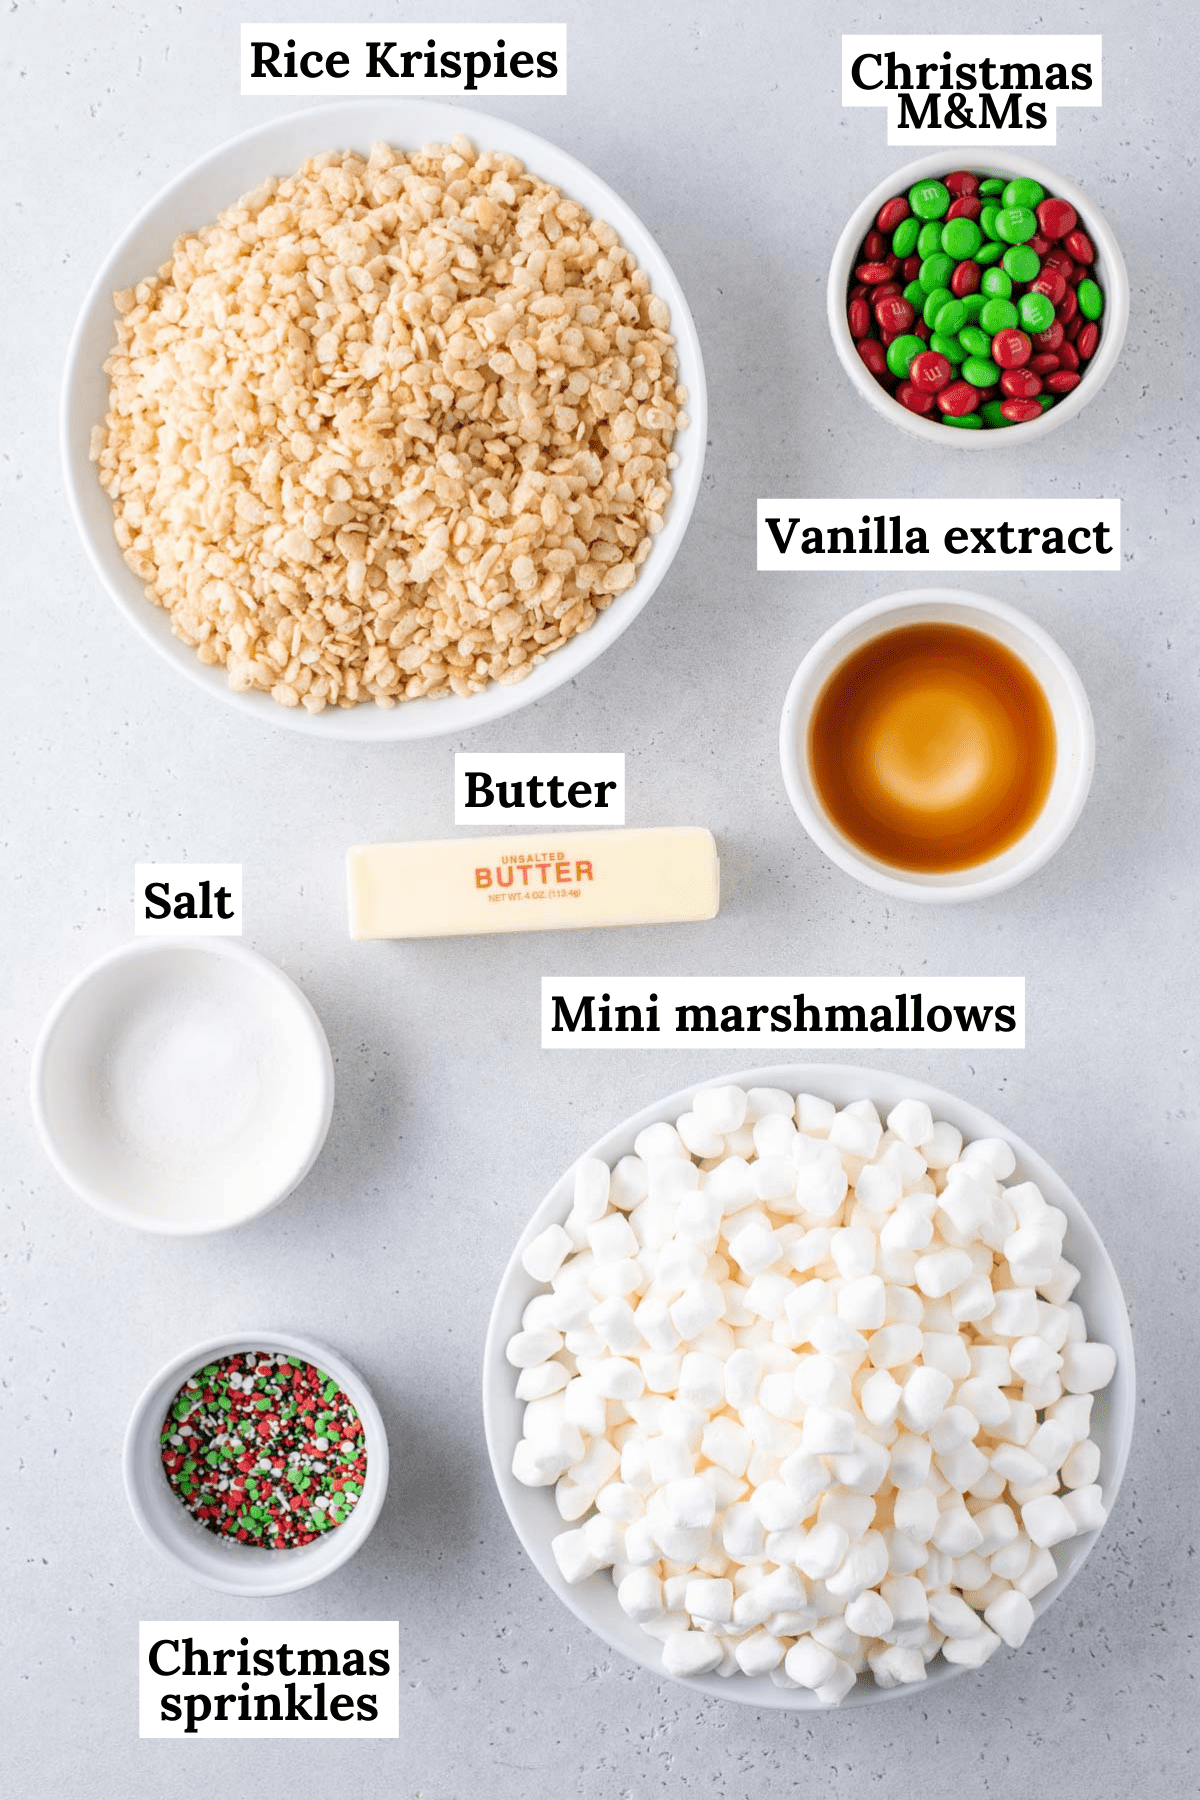 Overhead view of Rice Krispie treat ingredients measured out